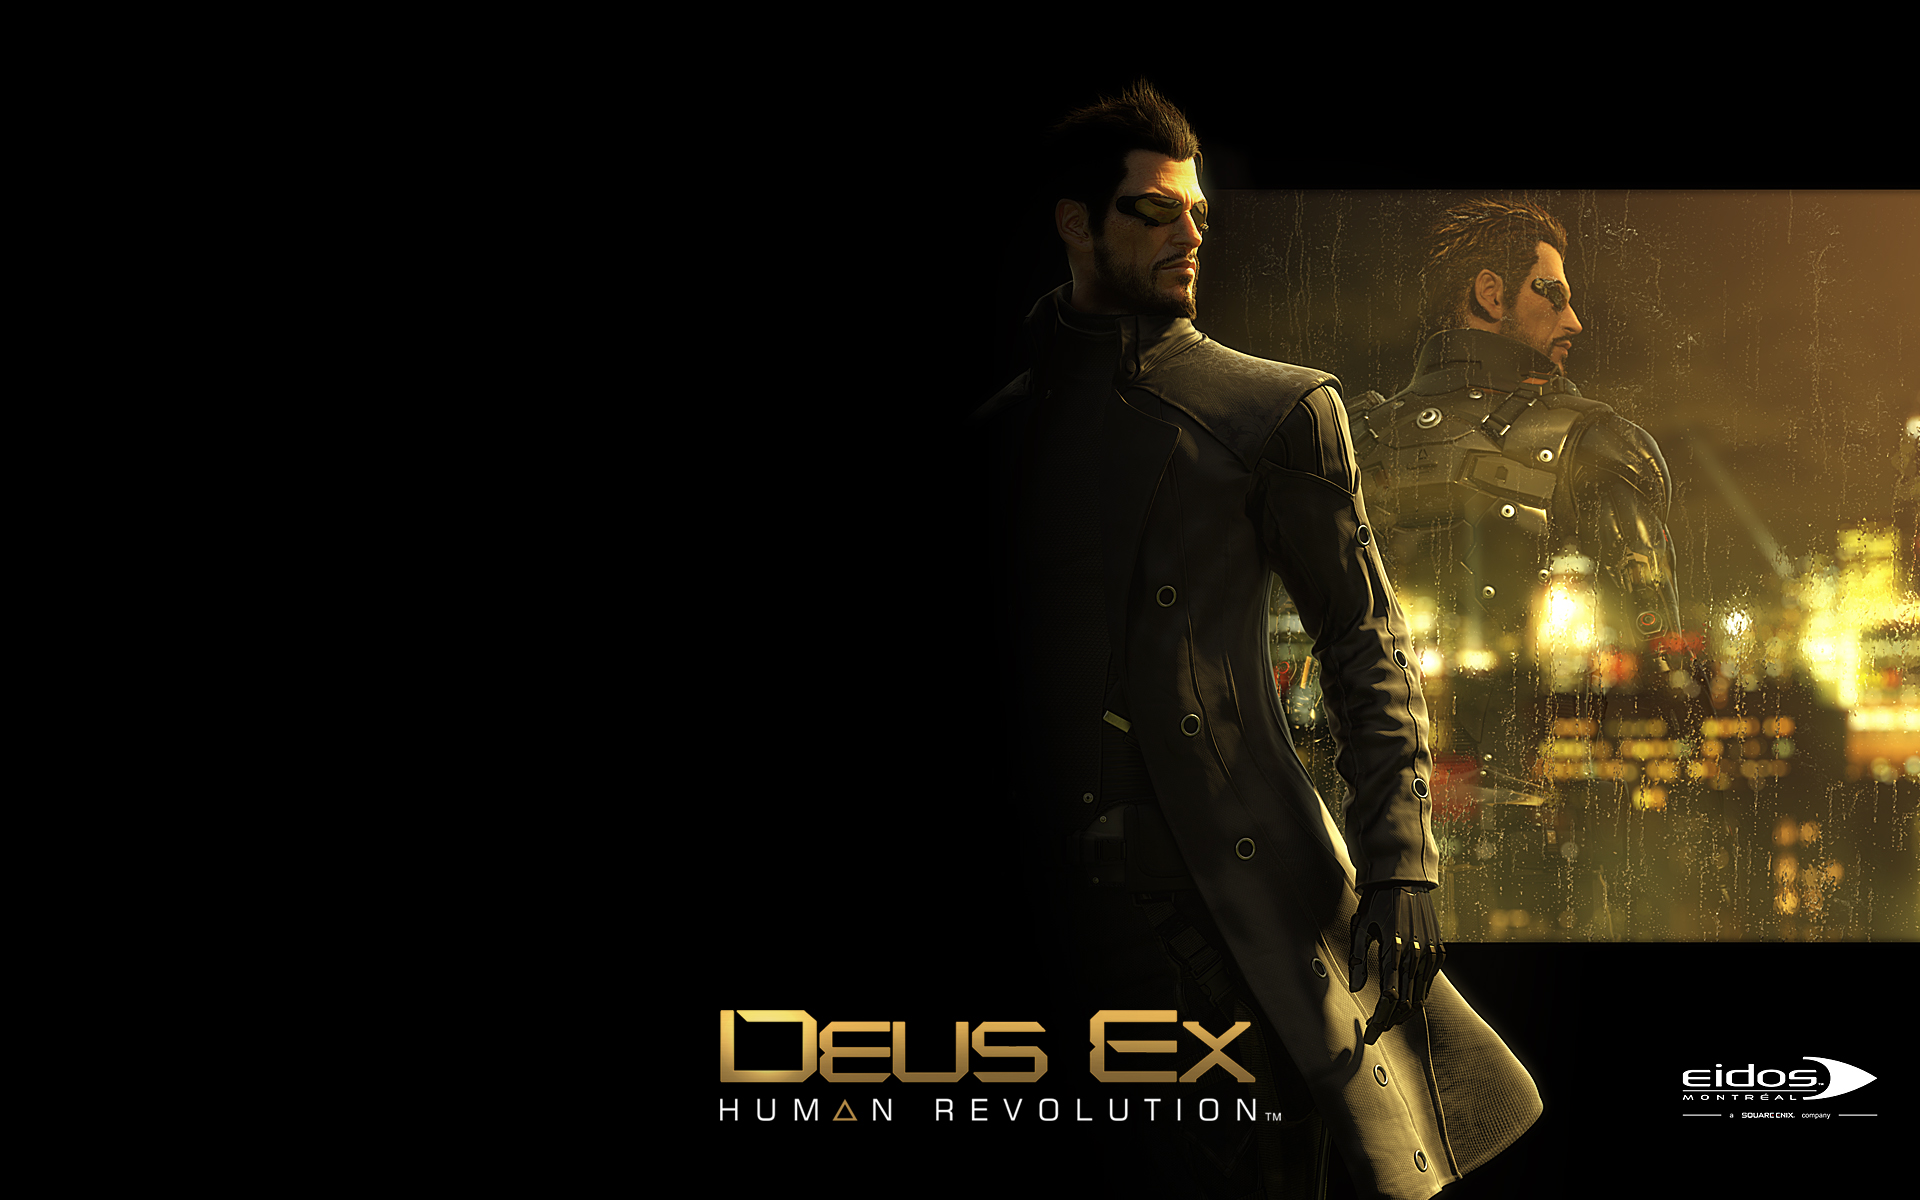 Deus Ex Human Revolution Wallpapers   HQ Wallpapers   HQ Wallpapers